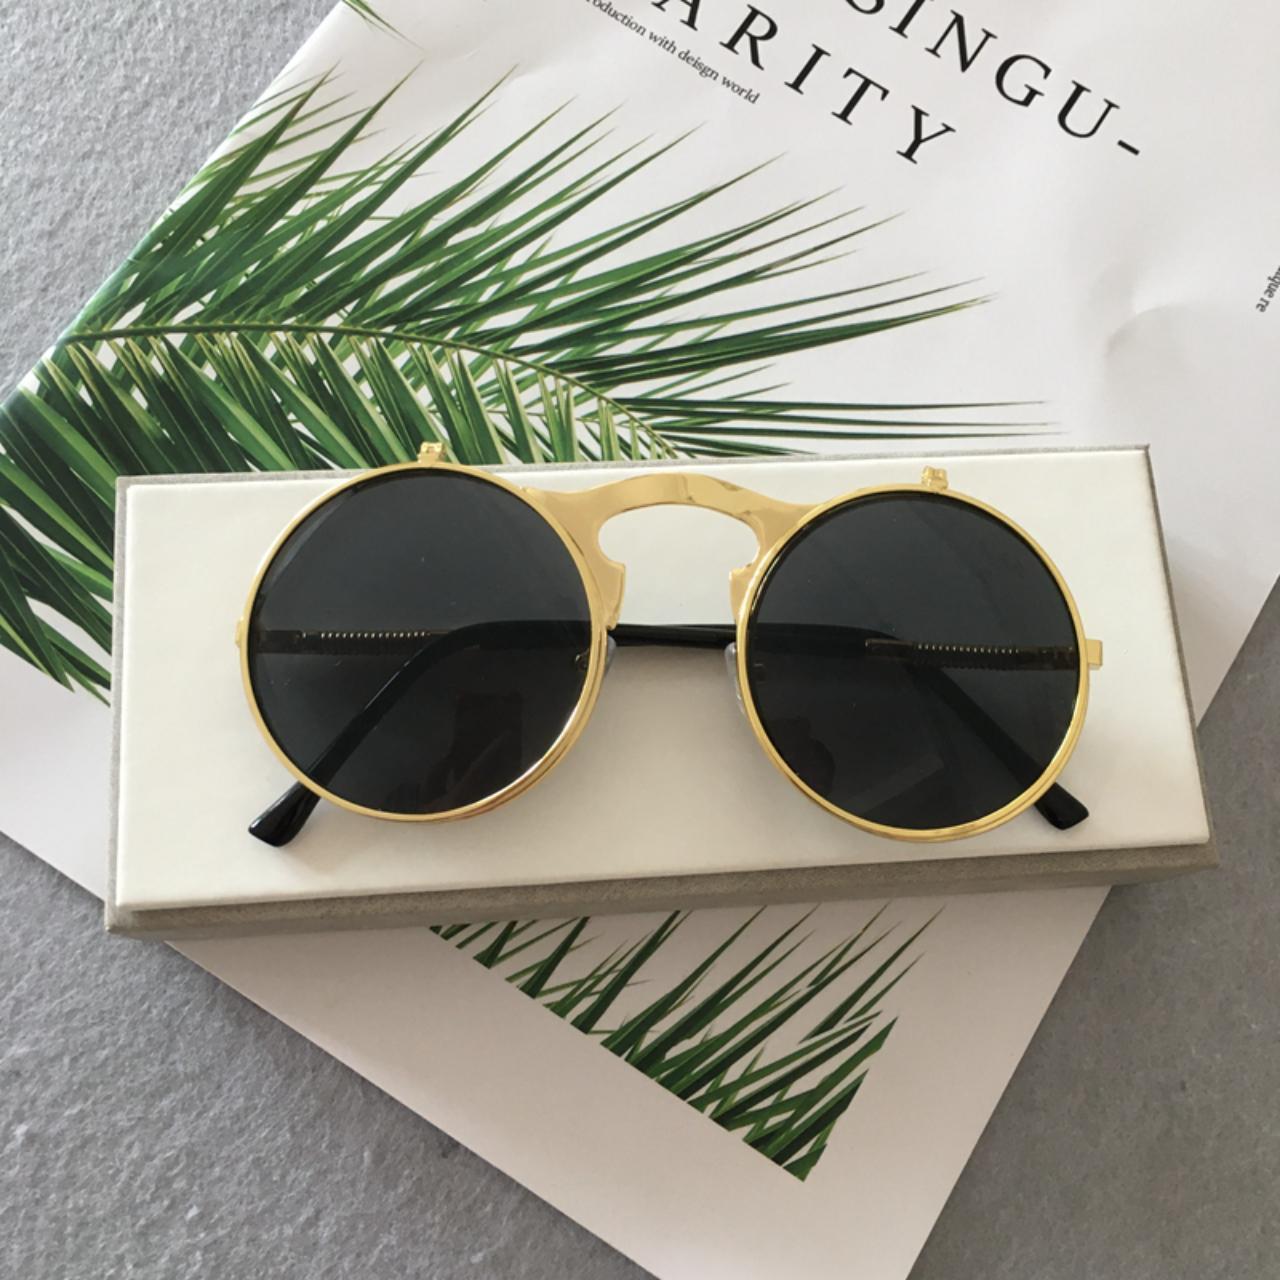 COASION Vintage Round Flip Up Sunglasses